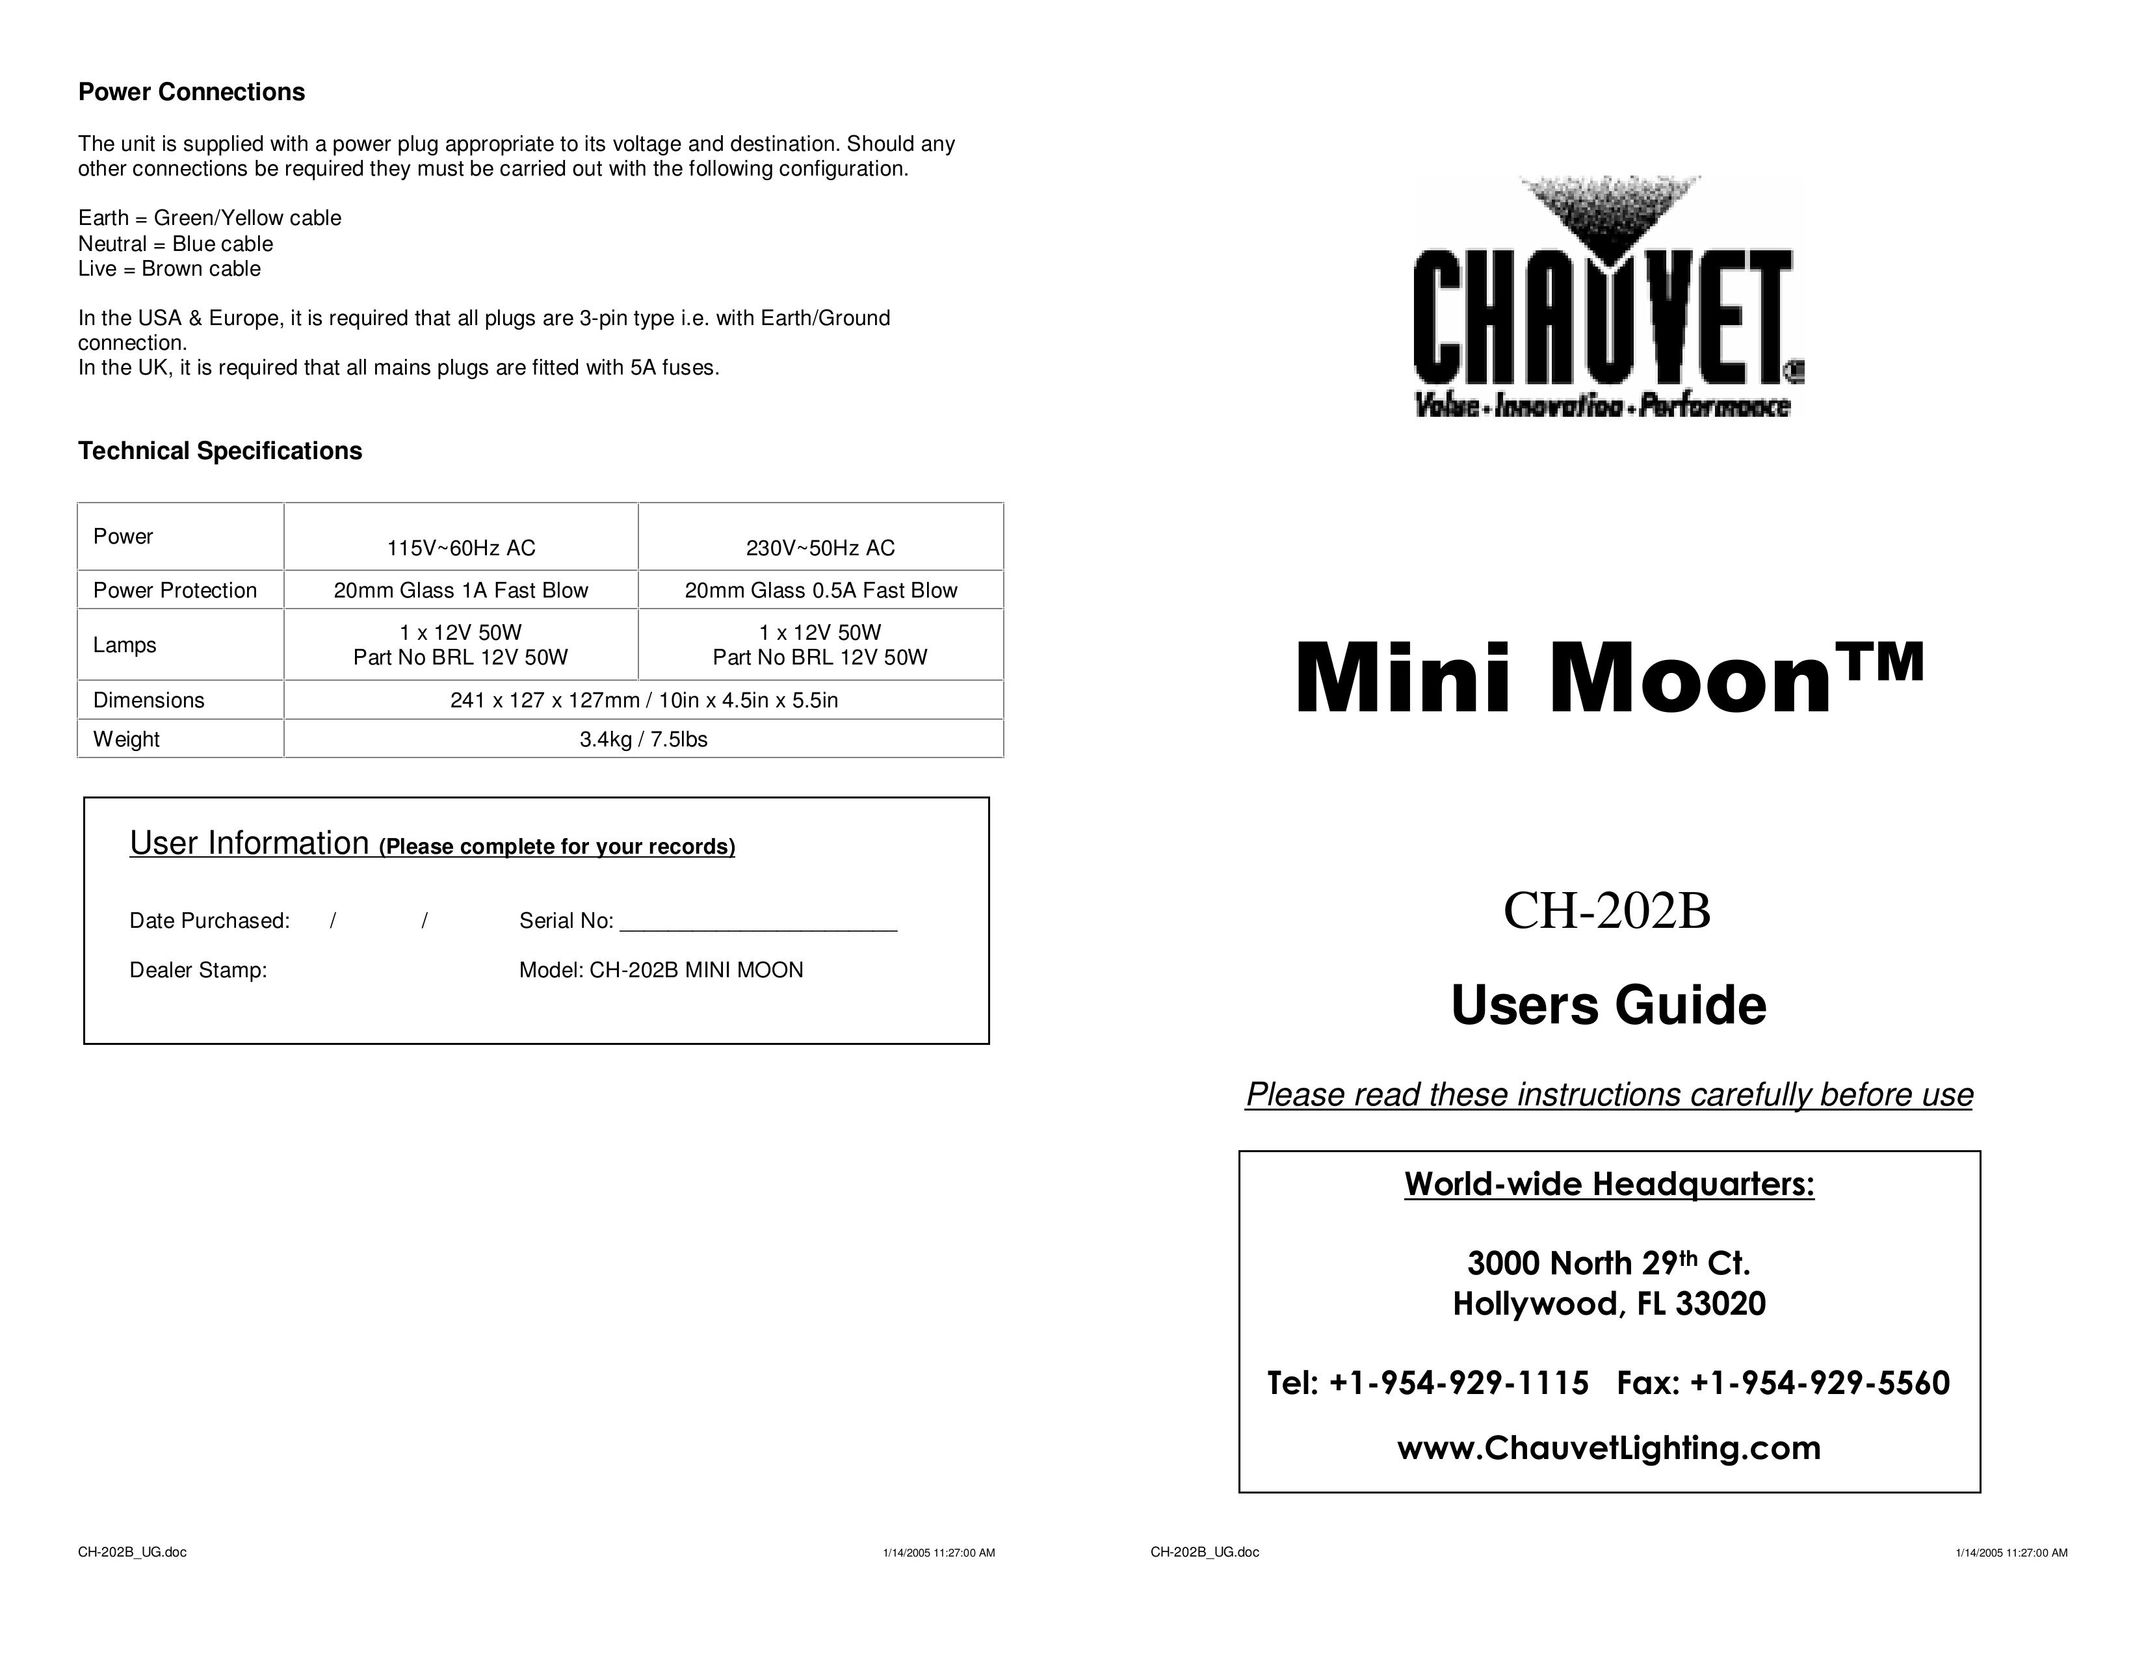 Chauvet CH-202B Power Supply User Manual